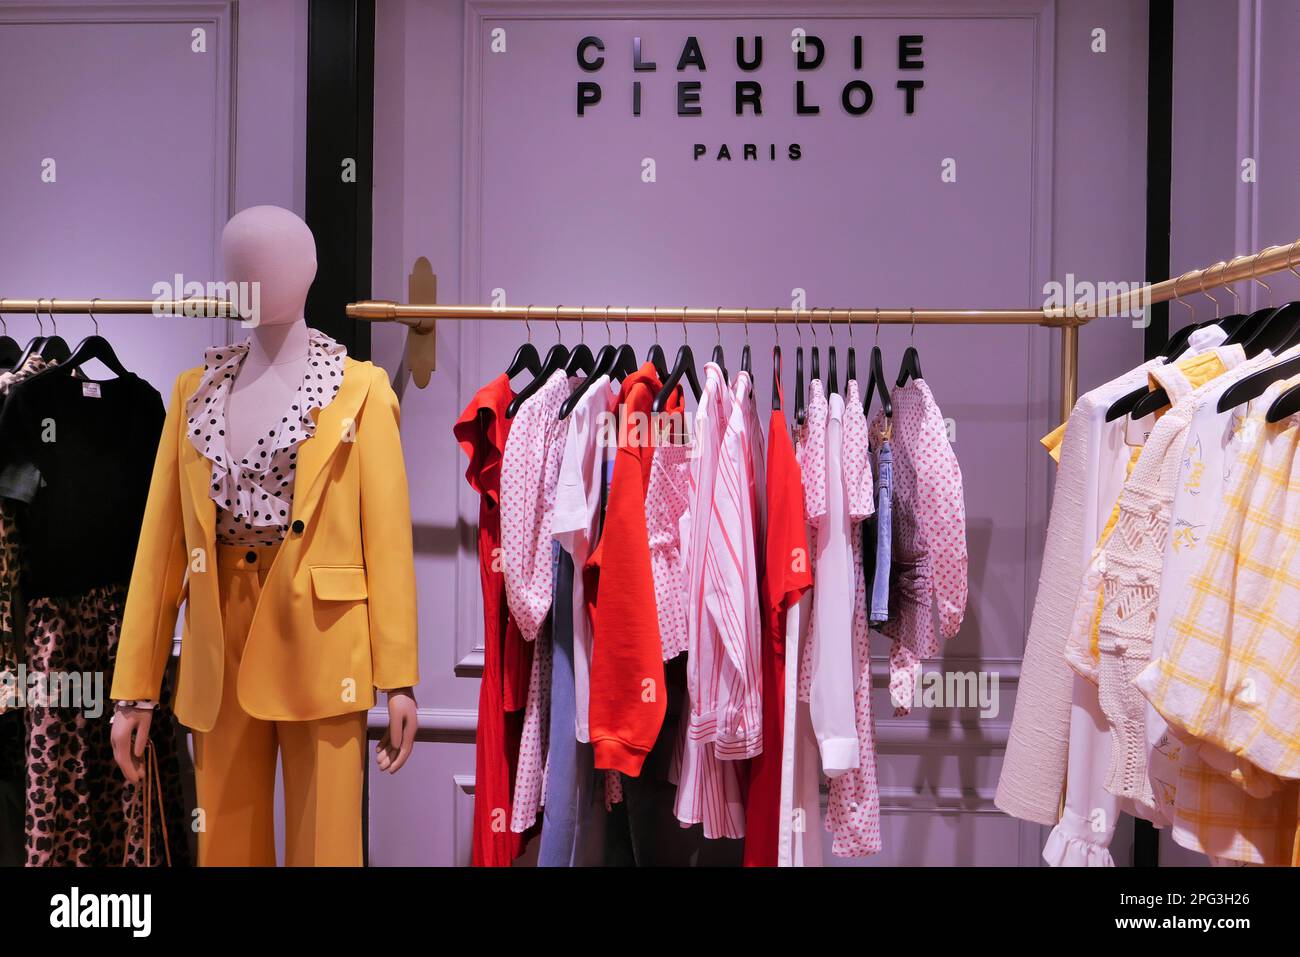 CLAUDIE PIERLOT PARIS CLOTHING FOR WOMAN INSIDE THE FASHION STORE Stock ...